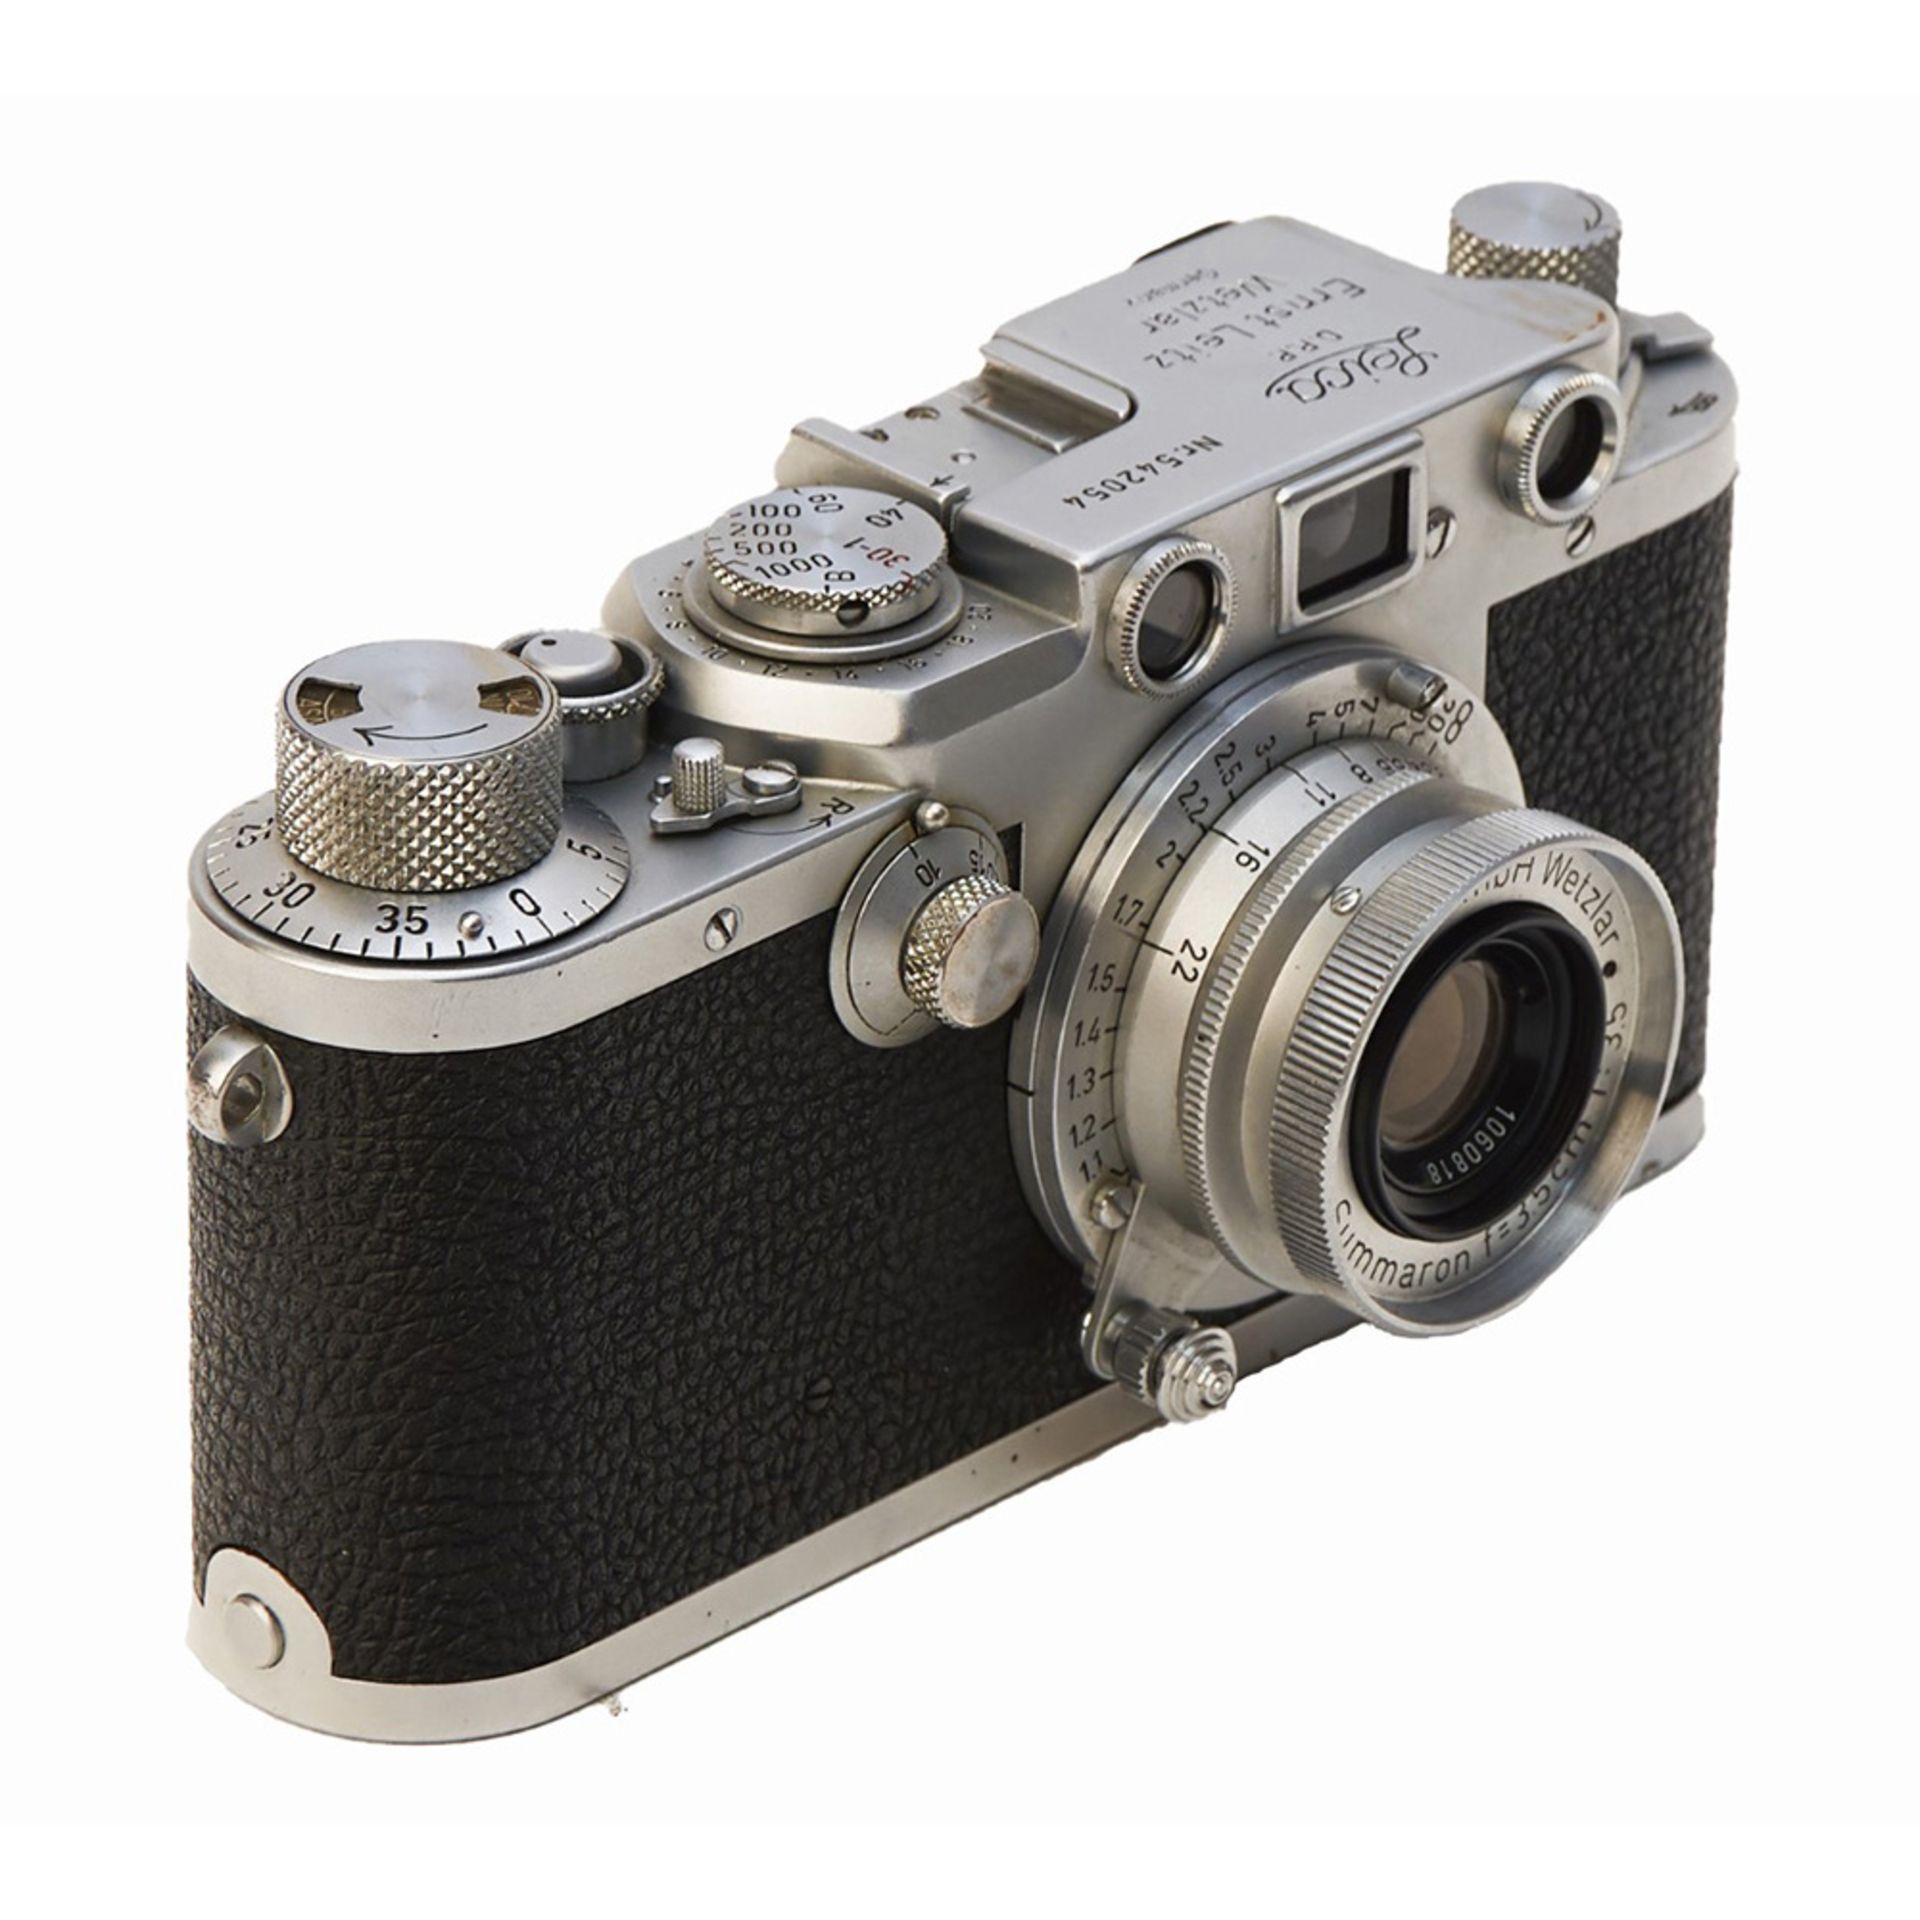 Cámara fotográfica alemana Leica modelo IIIf D.R.P. Nº 542054 con objetivo Summaron f=3.5 cm. 1:3.5,